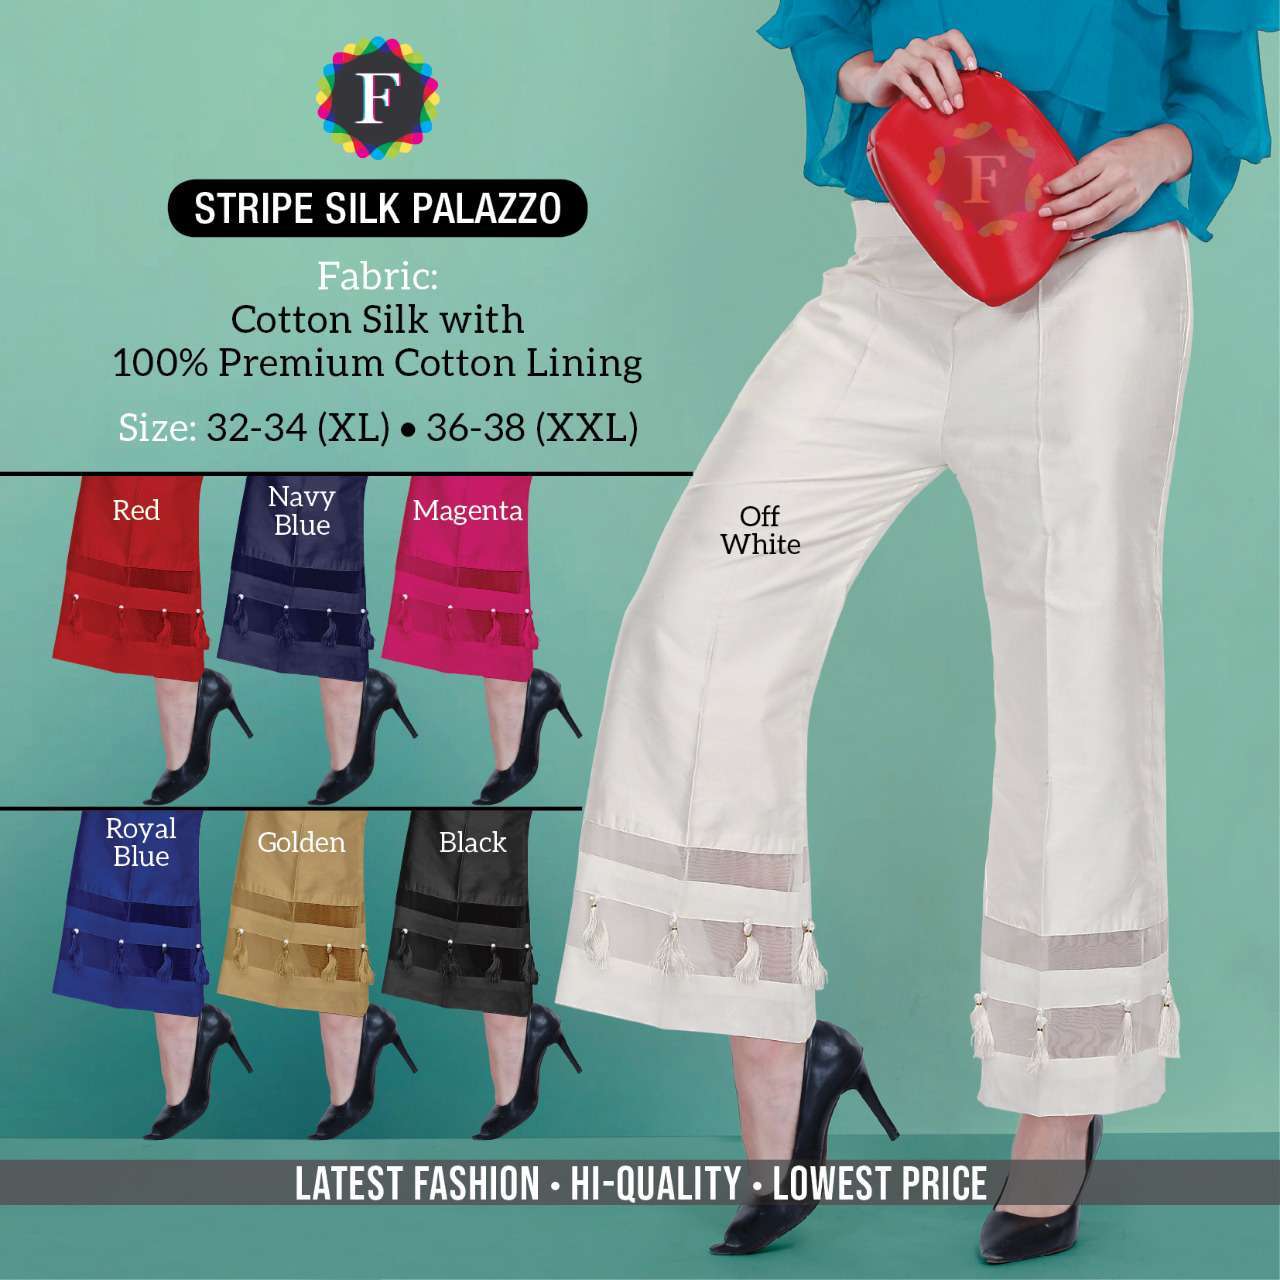 Stripe Silk Palazzo Cotton Silk Palazzo Bottom Collection 